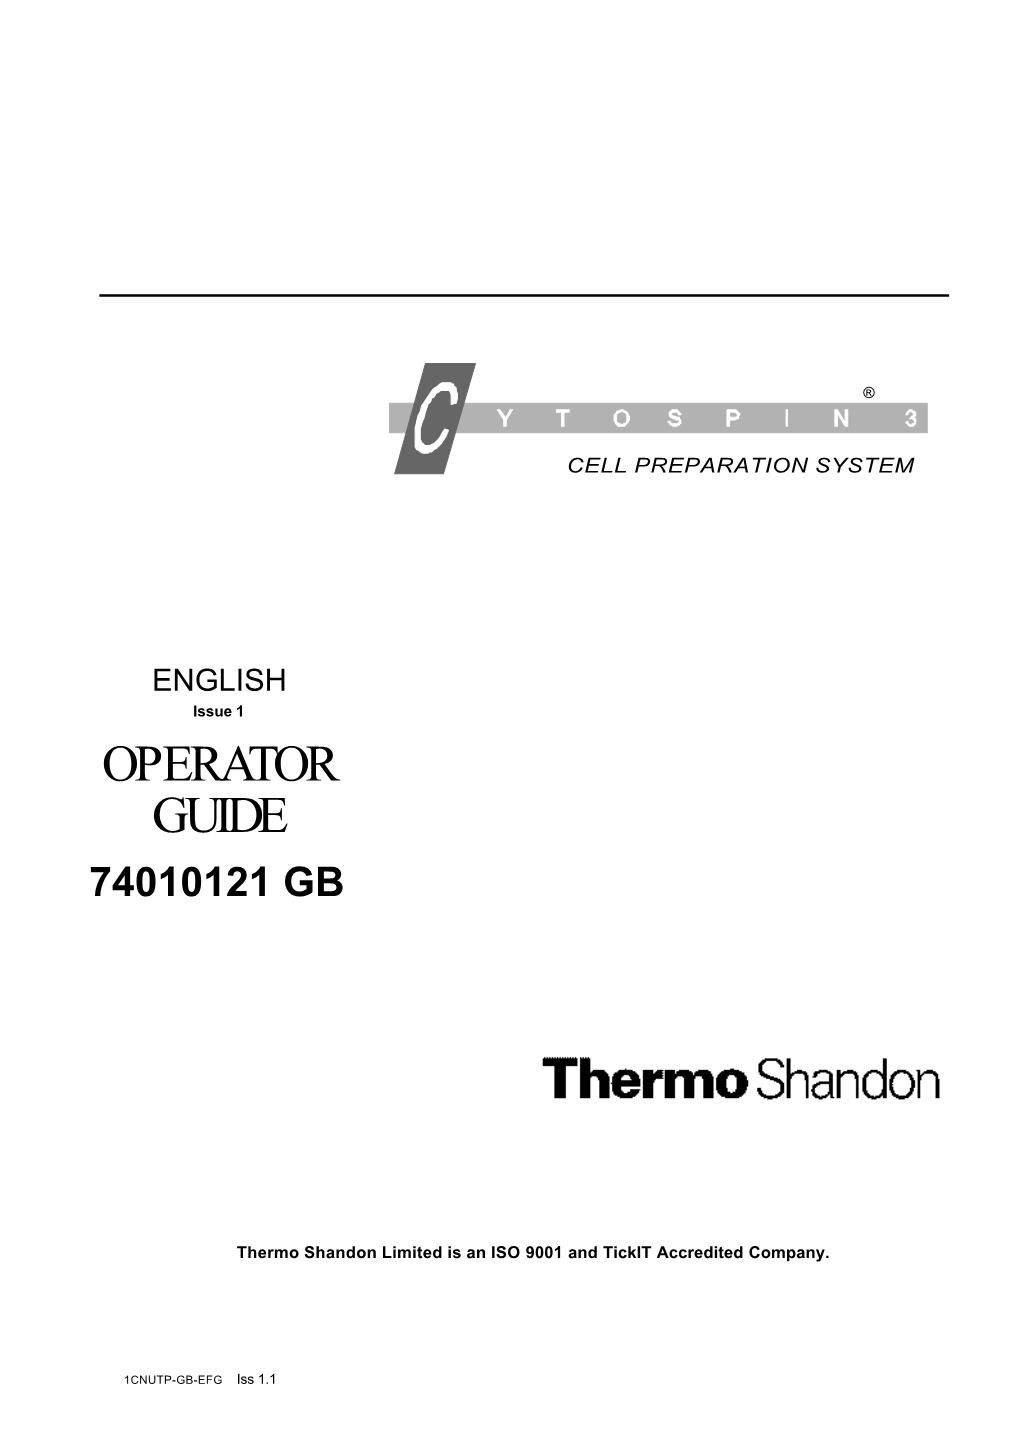 Shandon-Cytospin-3-Operator-Guide